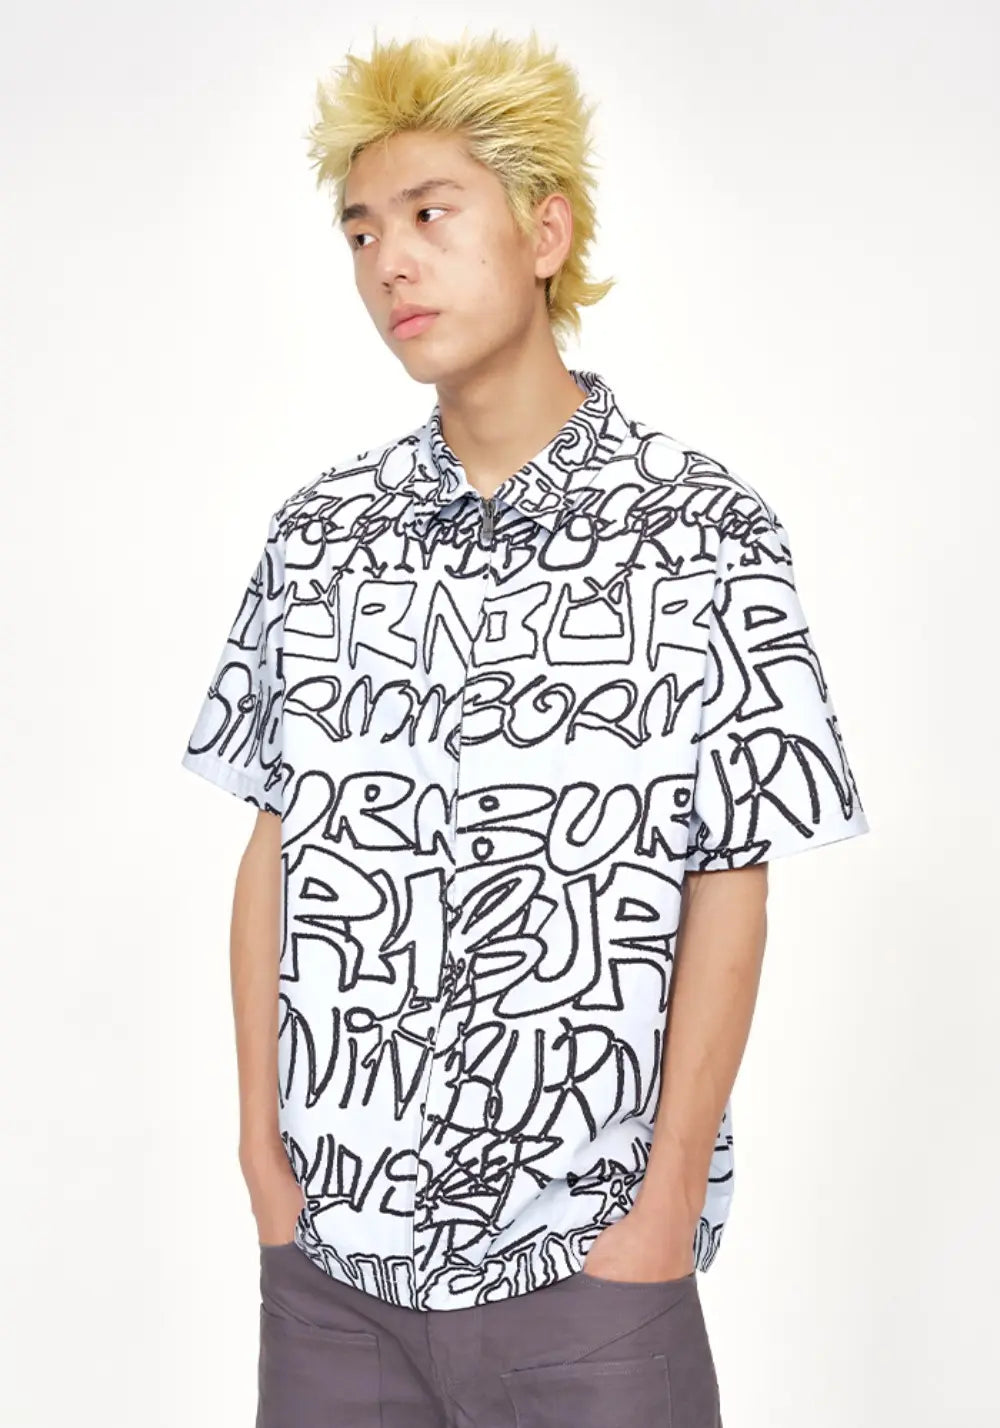 Short-Sleeved Shirt With Full Graffiti Font